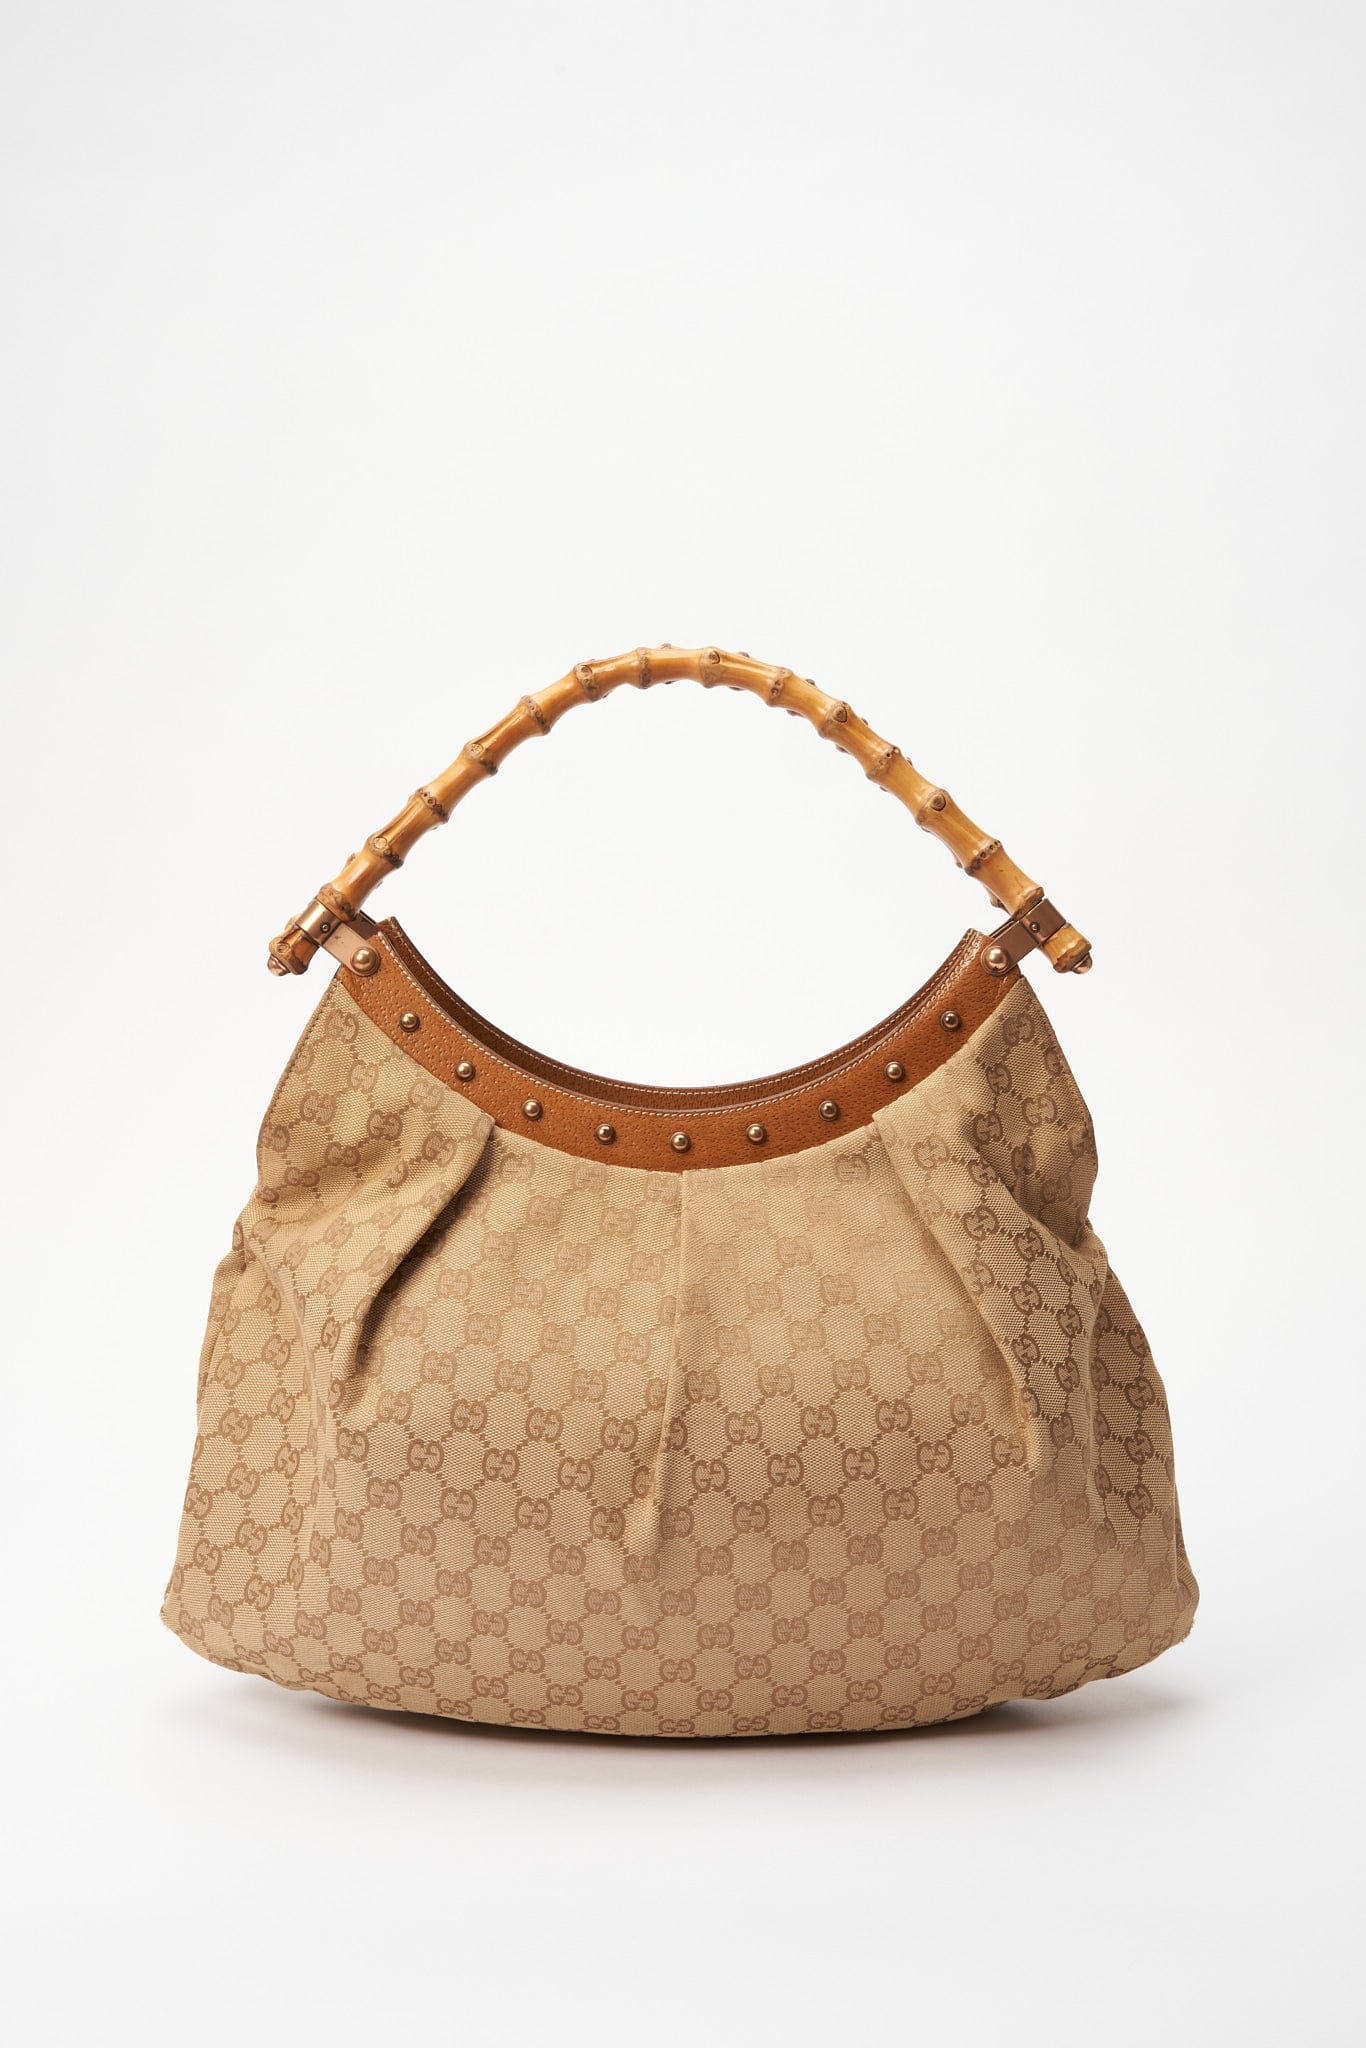 The Lady Bag: Vintage Gucci